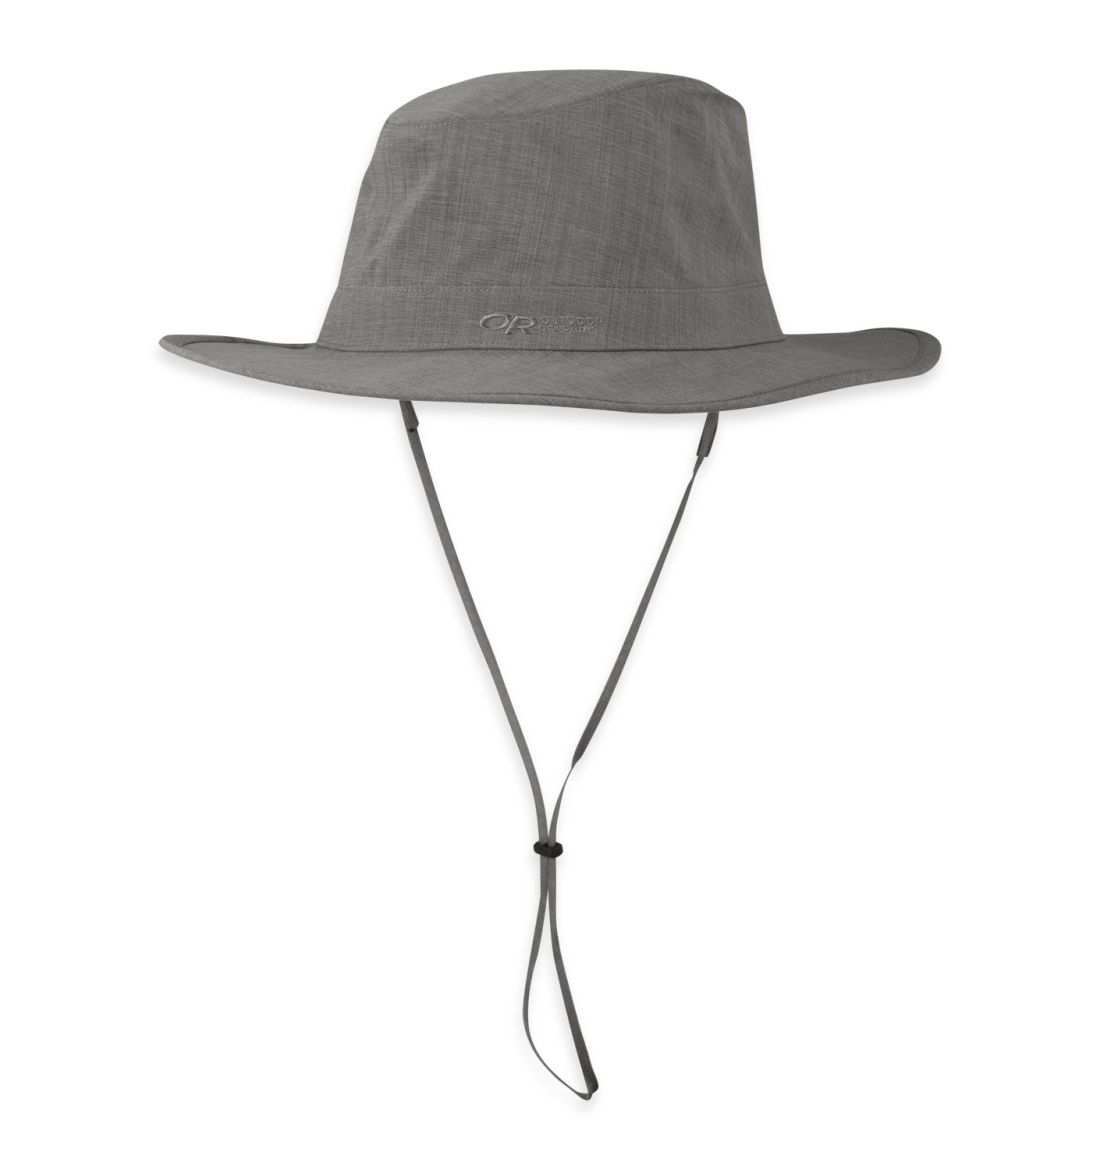 Outdoor Research - Стильная летняя шляпа Olympia Rain Hat